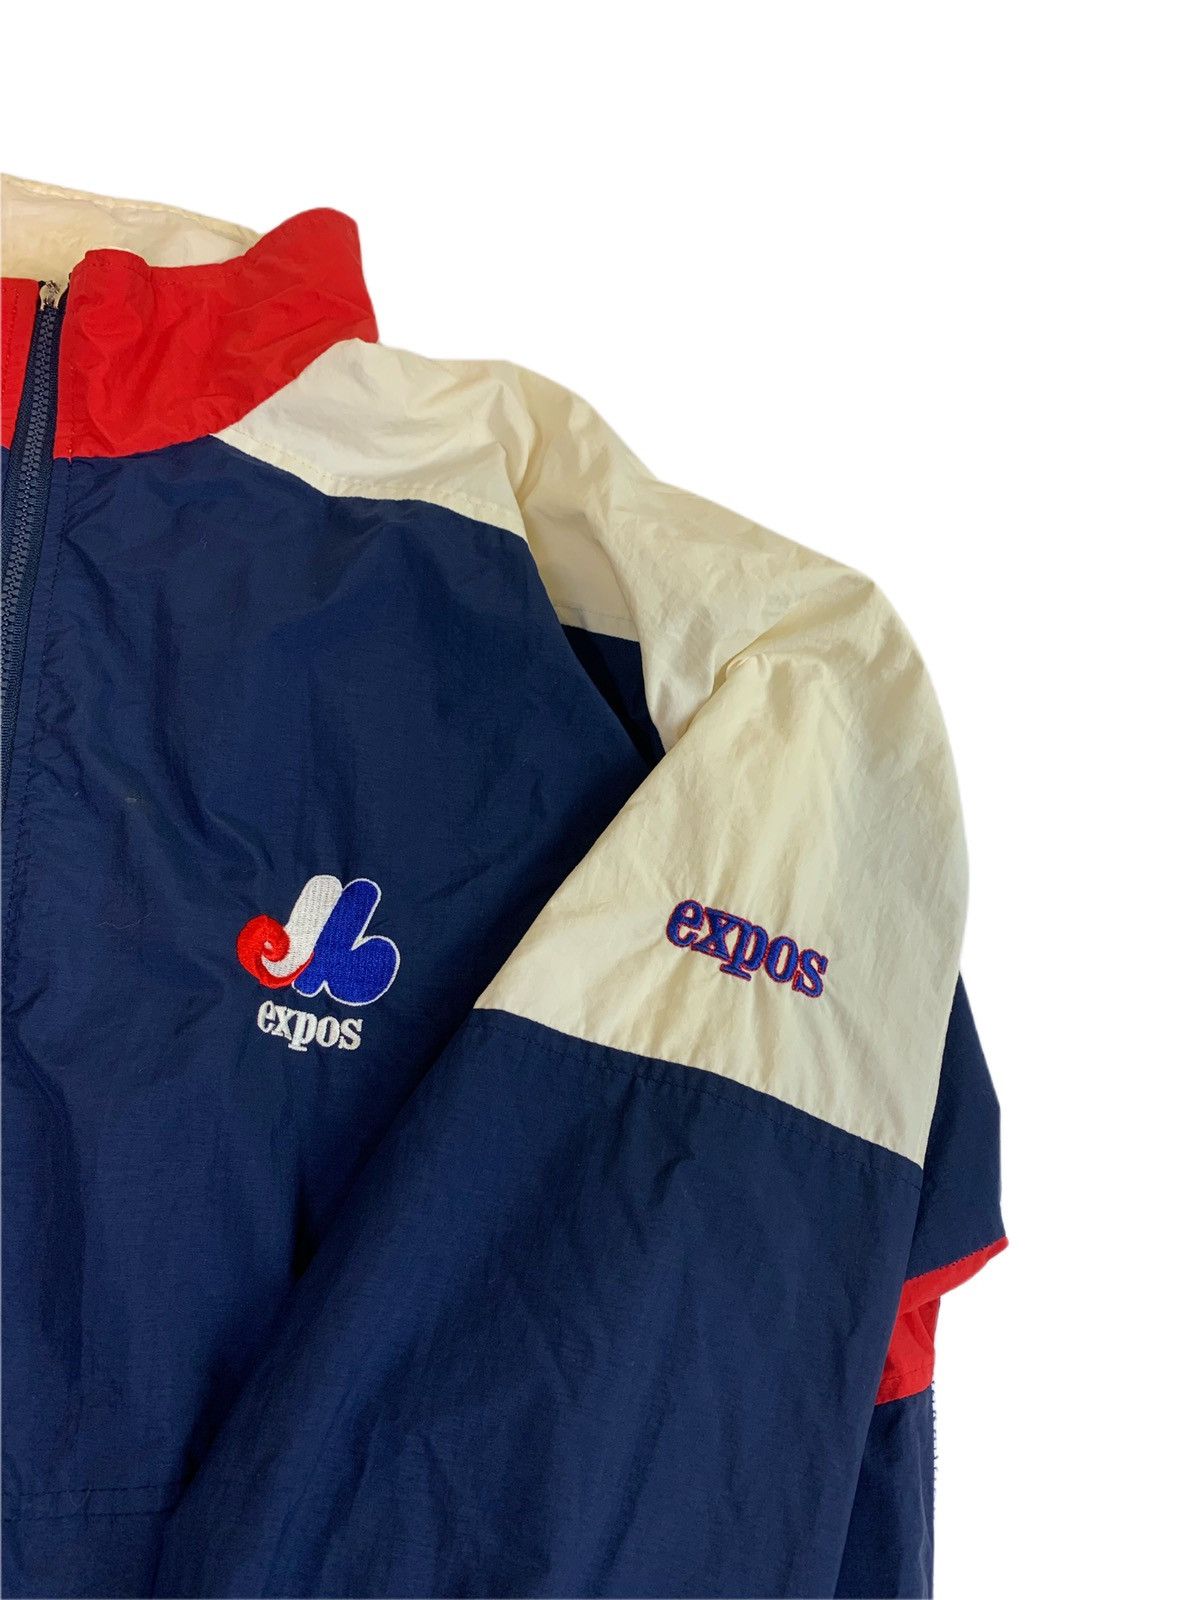 Vintage Vintage Montreal Expos Starter Windbreaker Jacket Size US XL / EU 56 / 4 - 2 Preview